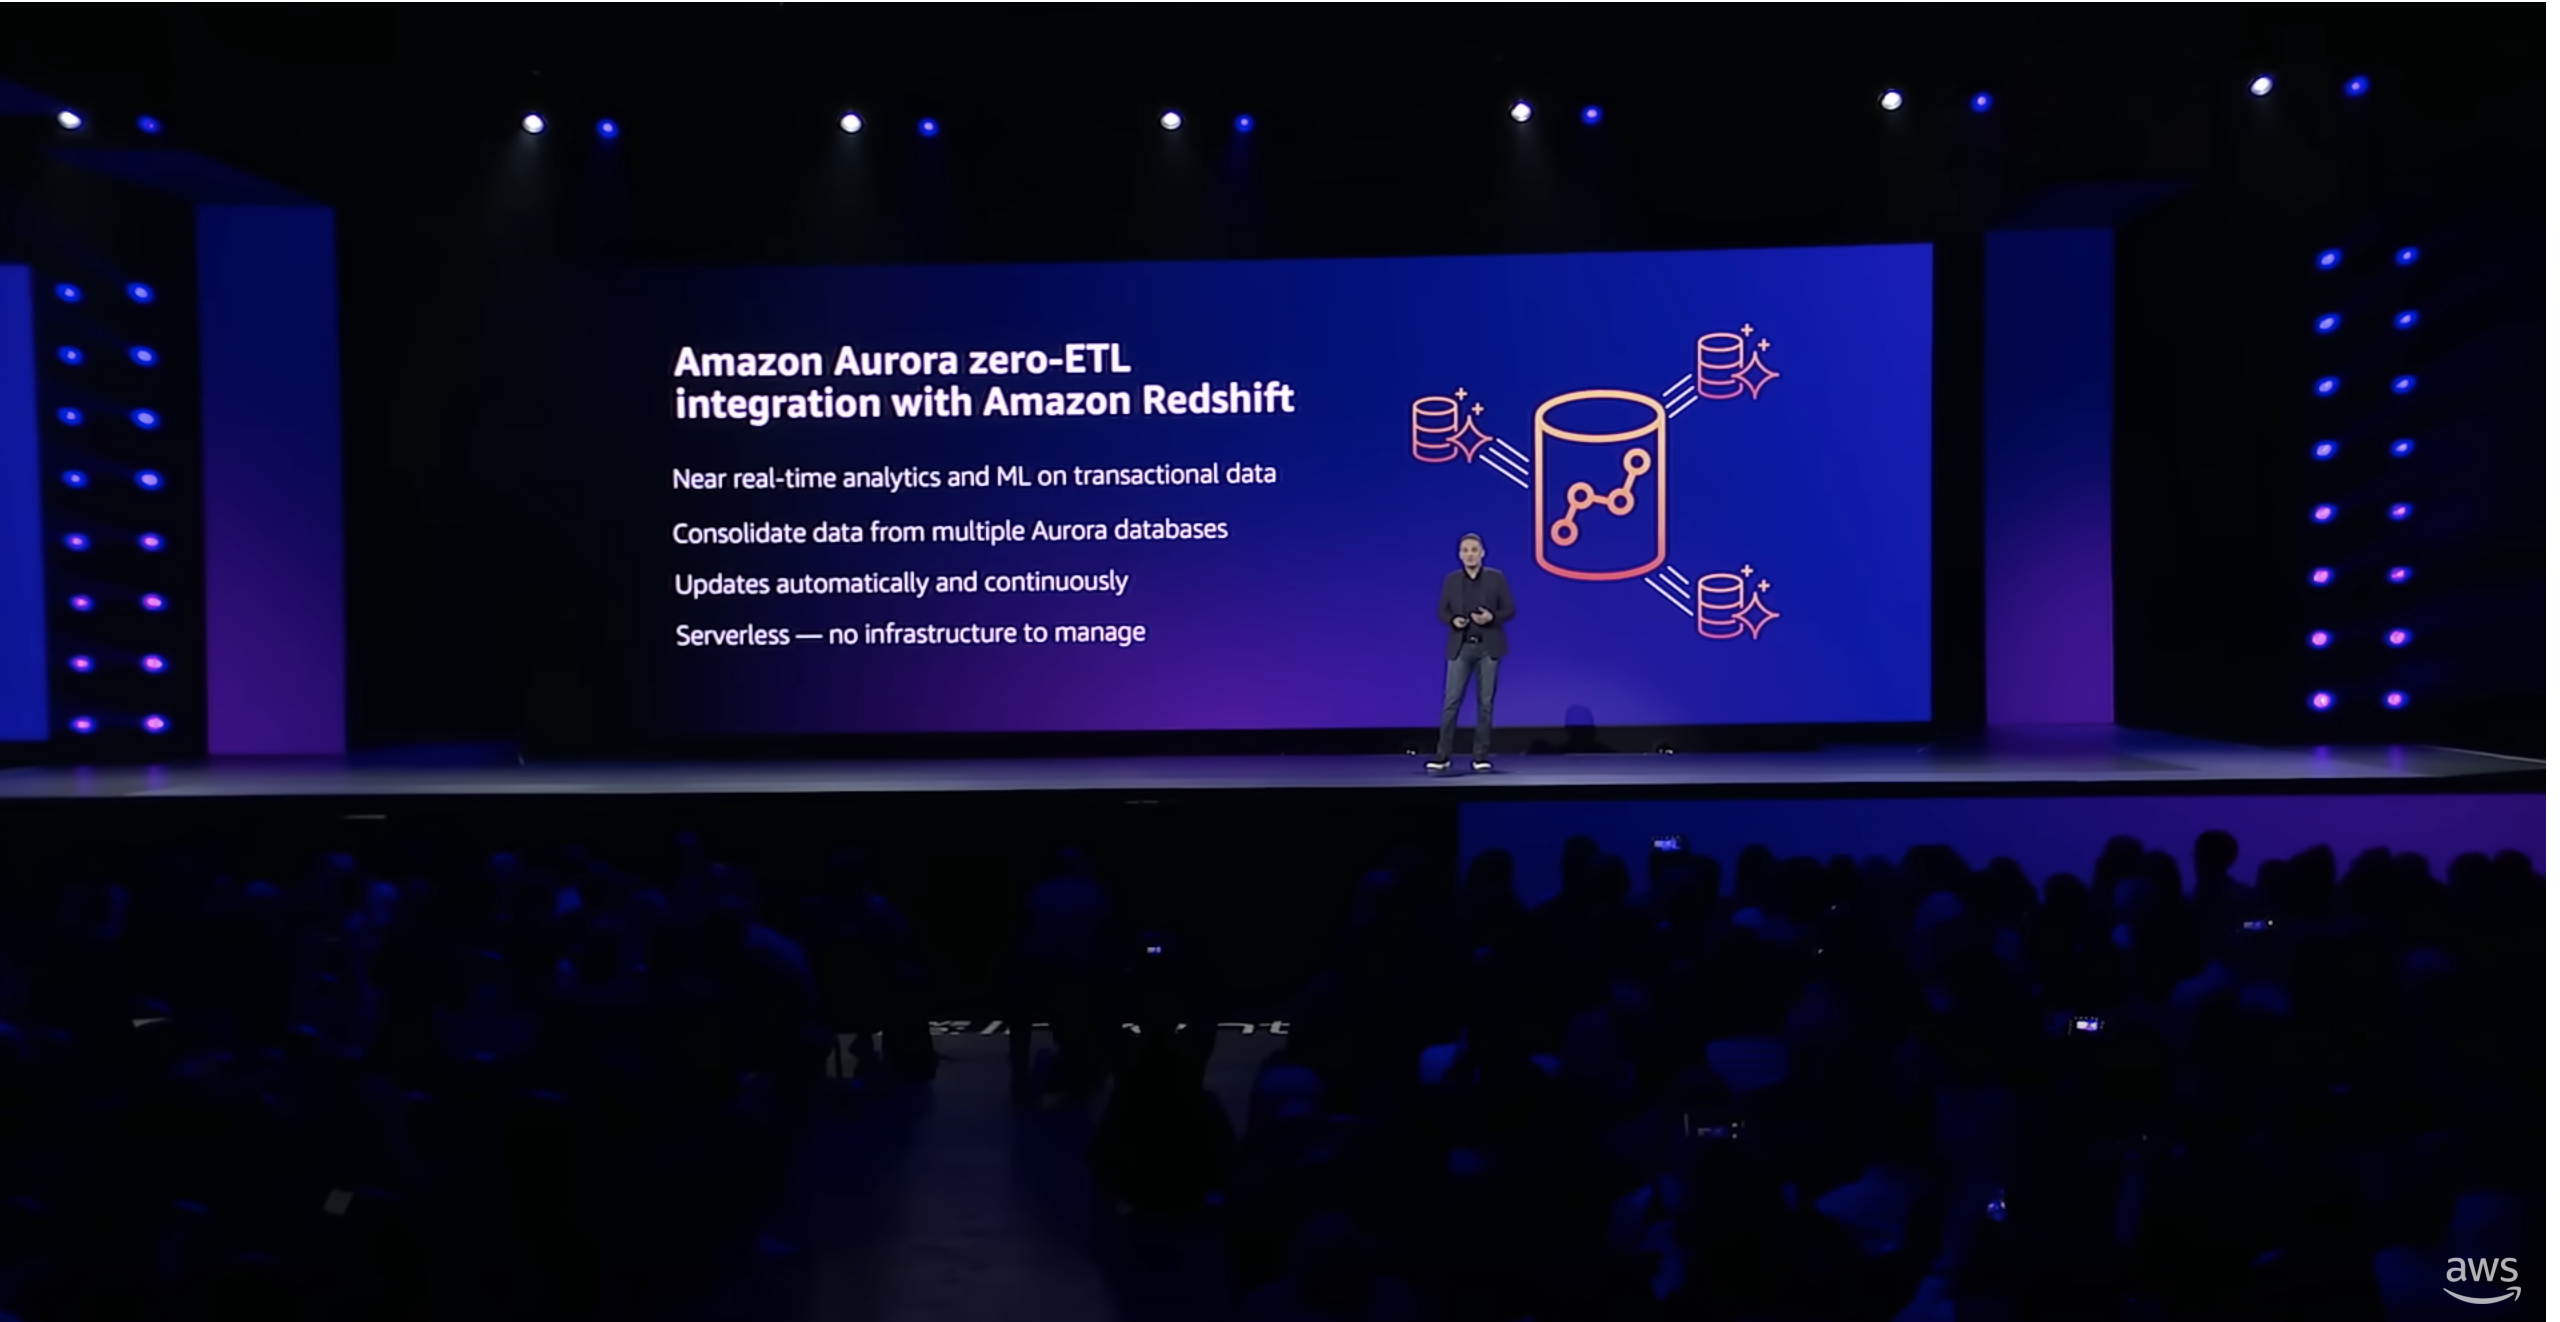 Amazon Aurora with zero ETL integration with Amazon Redshift